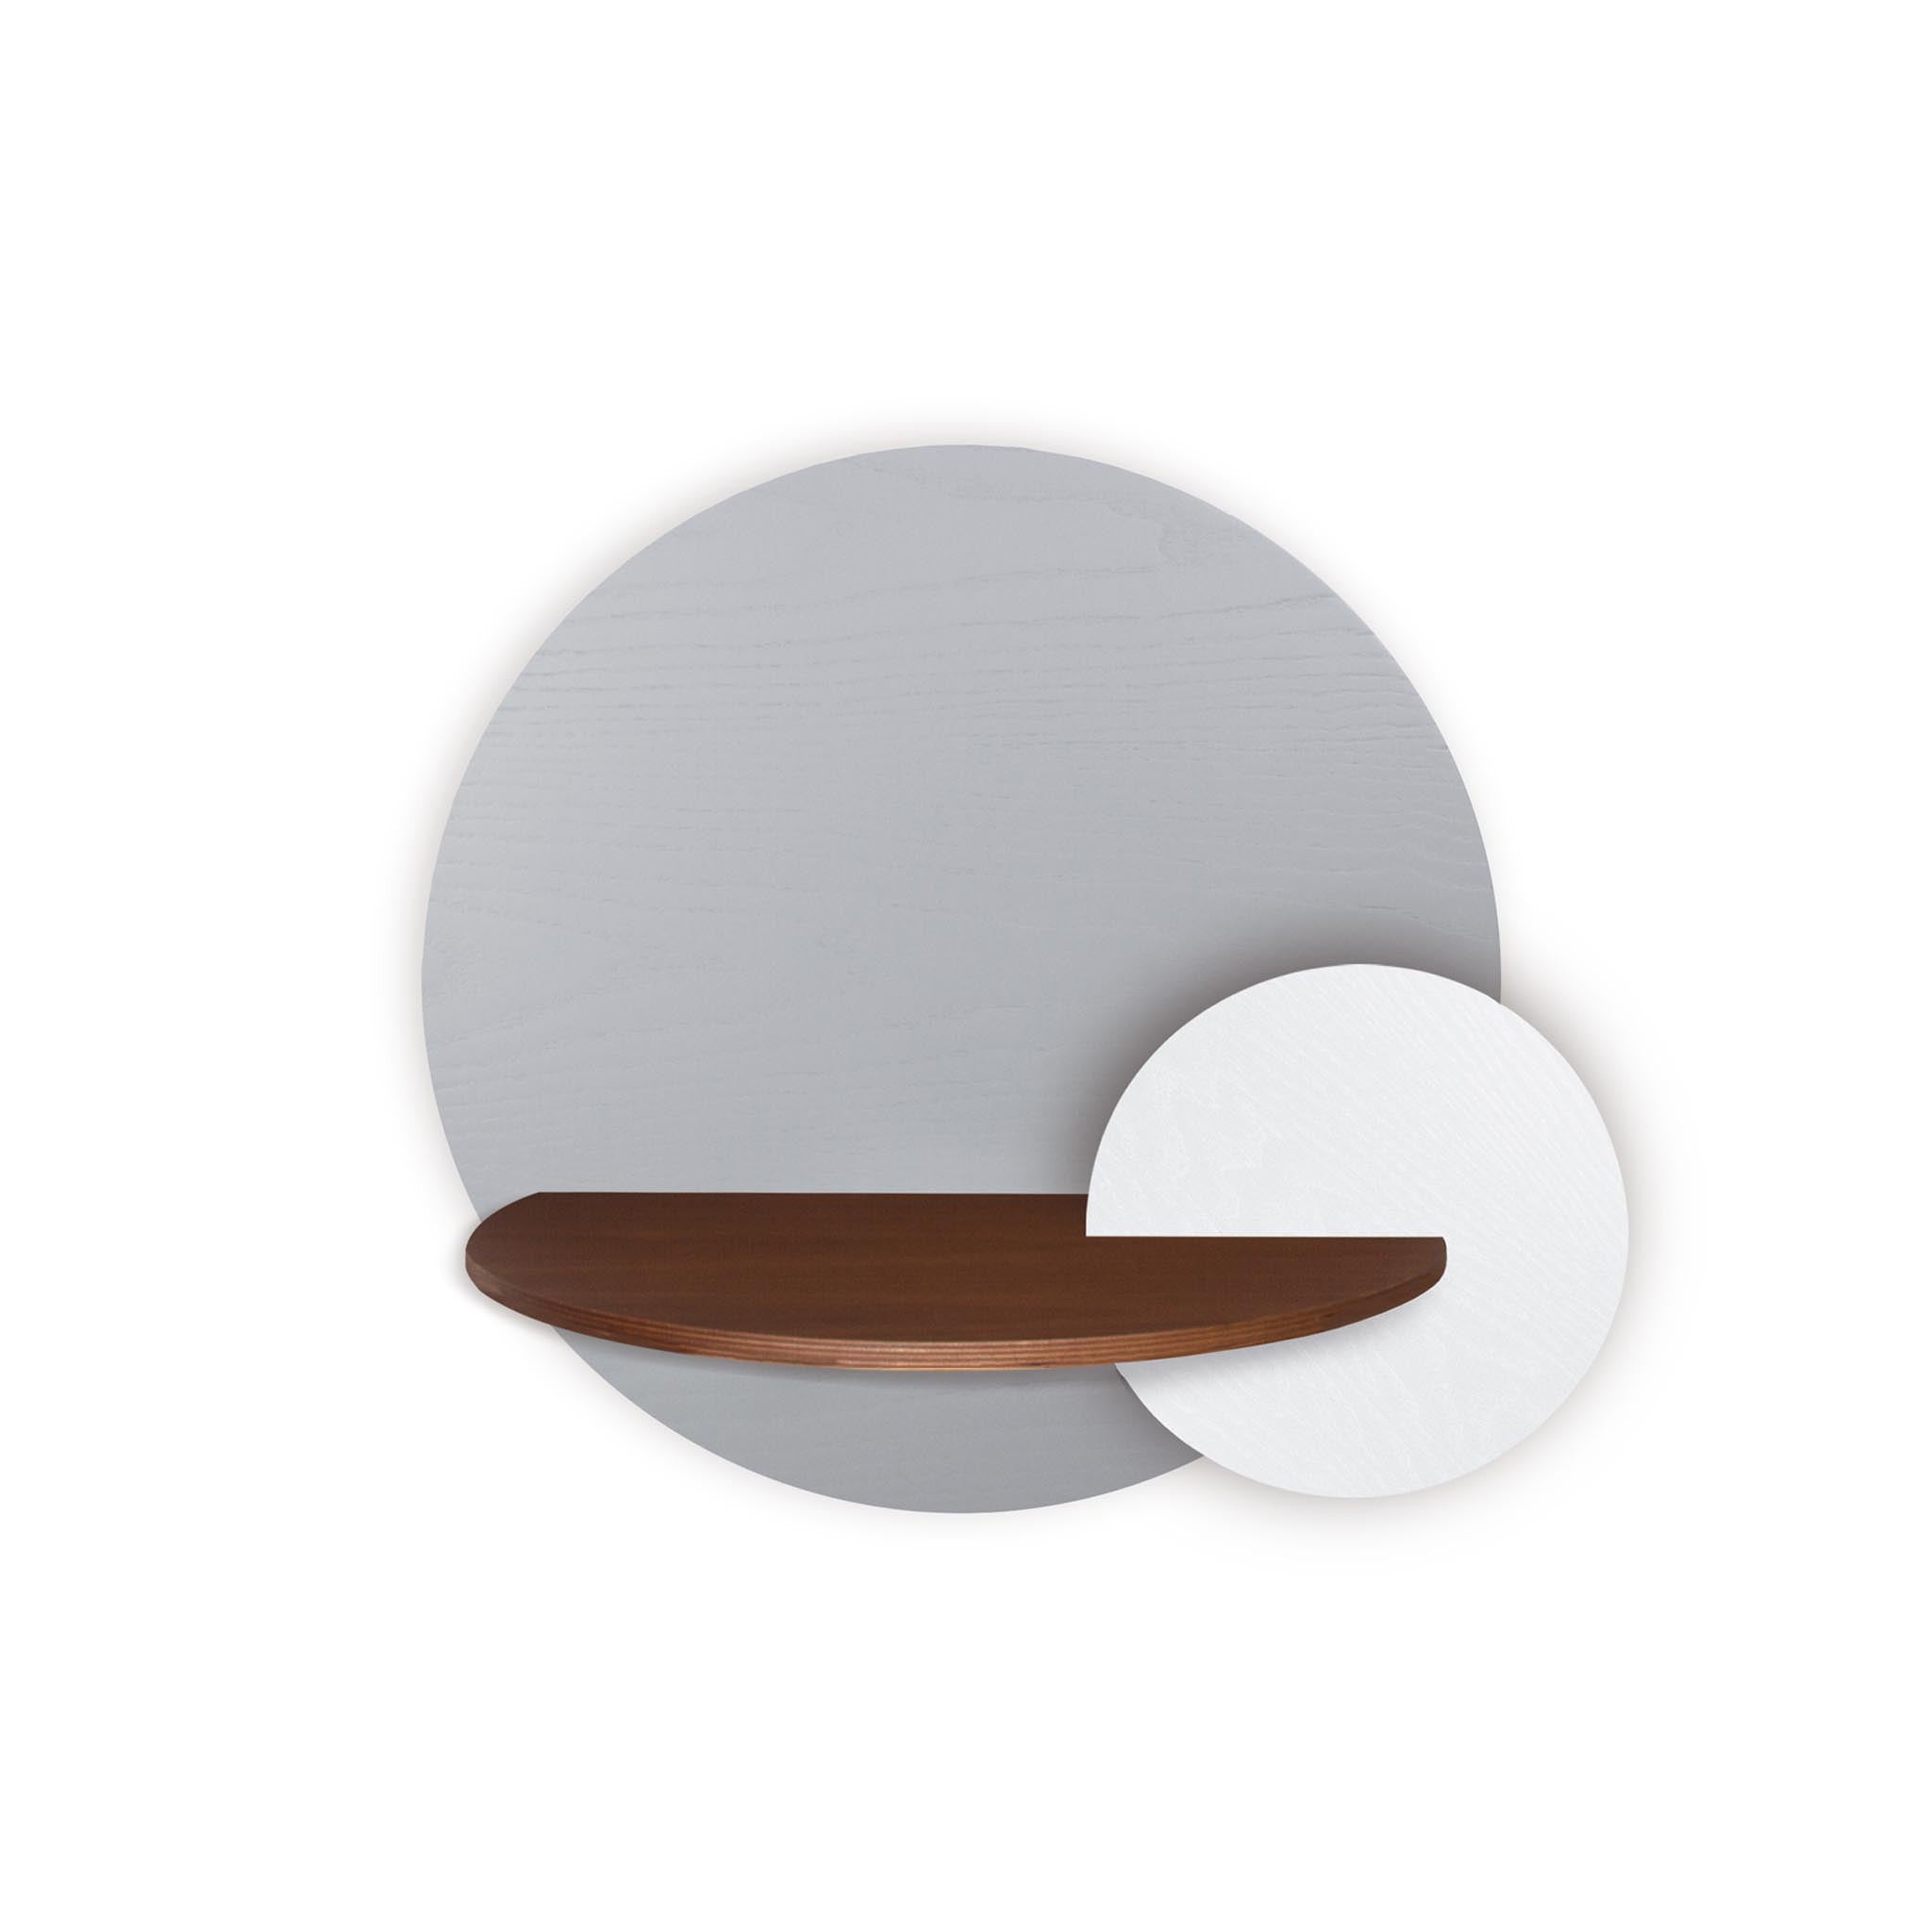 Alba floating nightstand · Grey circle